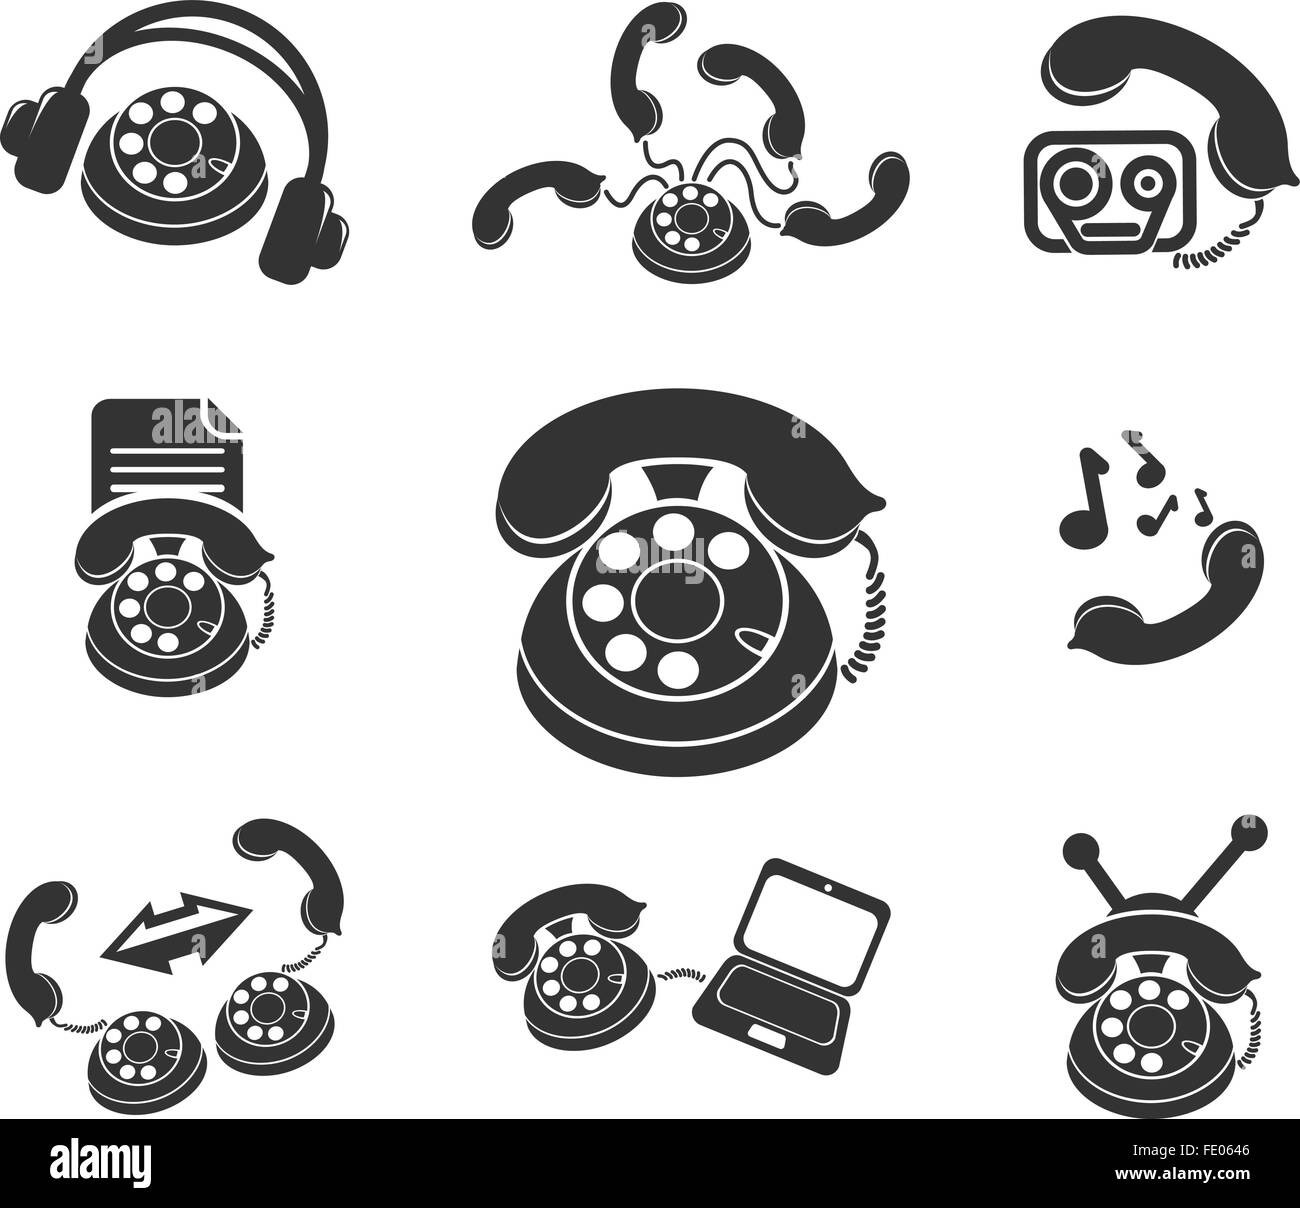 Telephone Icons Stock Vector